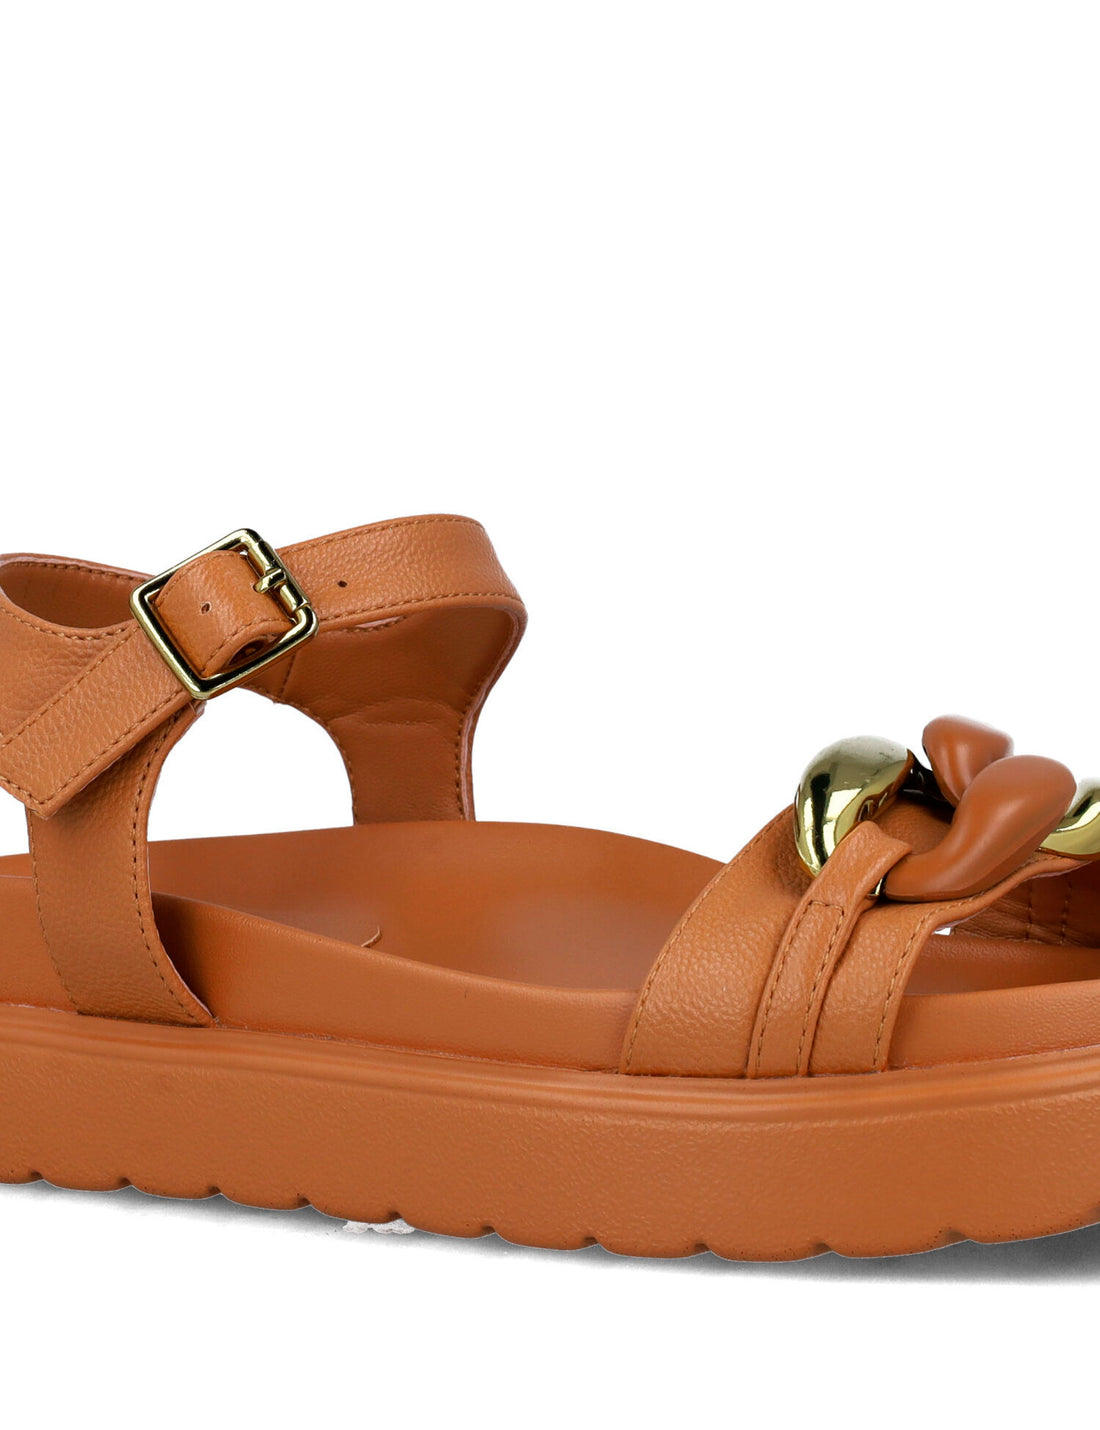 Brown Platform Sandals With Ankle Strap_25556_22_02